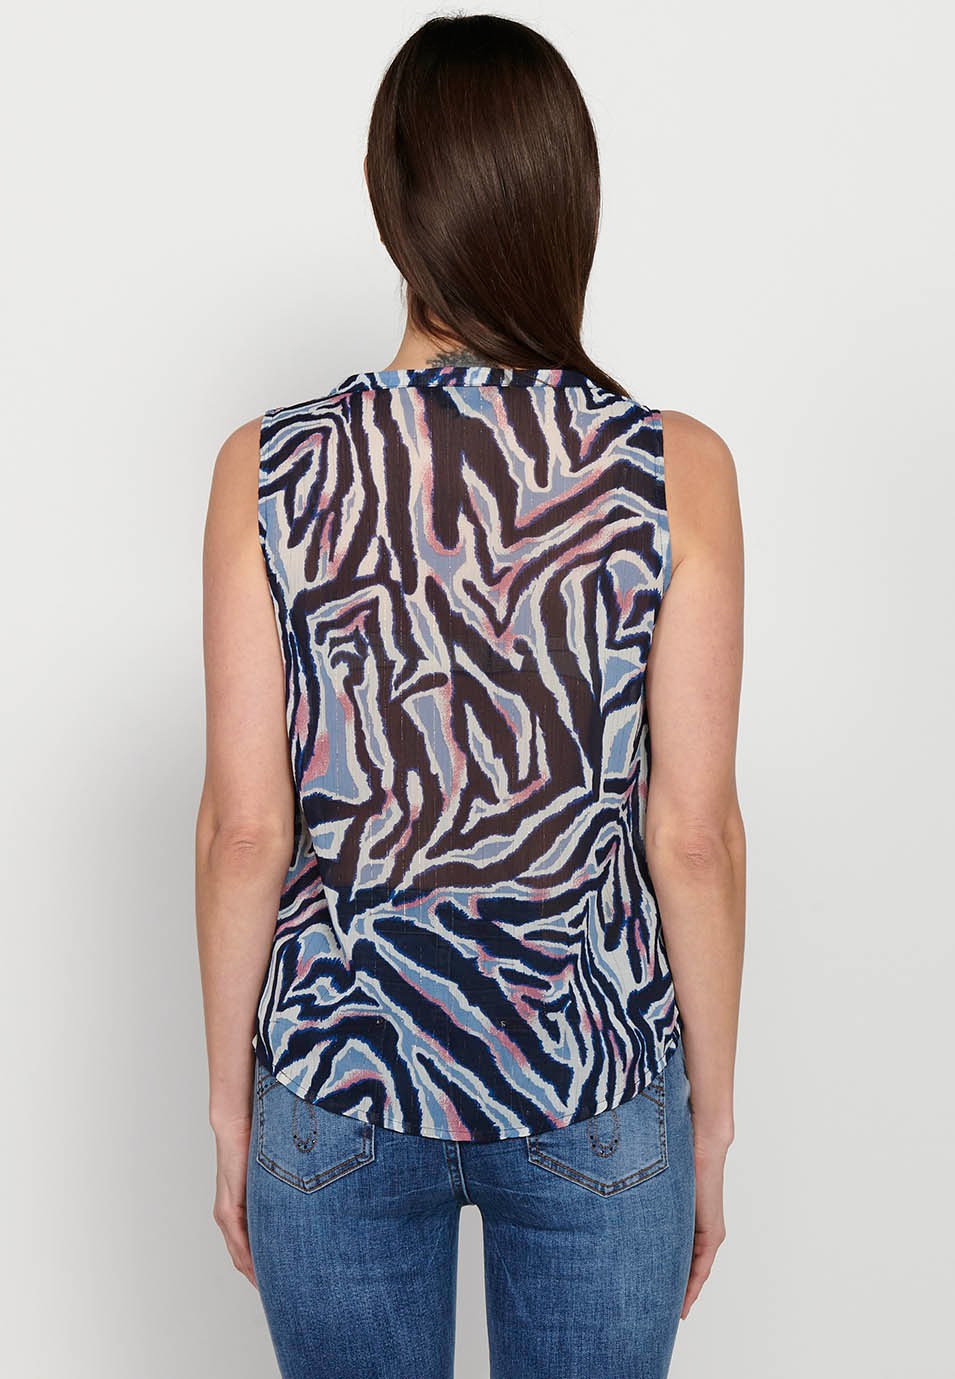 Sleeveless printed blouse, V-neckline, pleat finish, multicolored for women